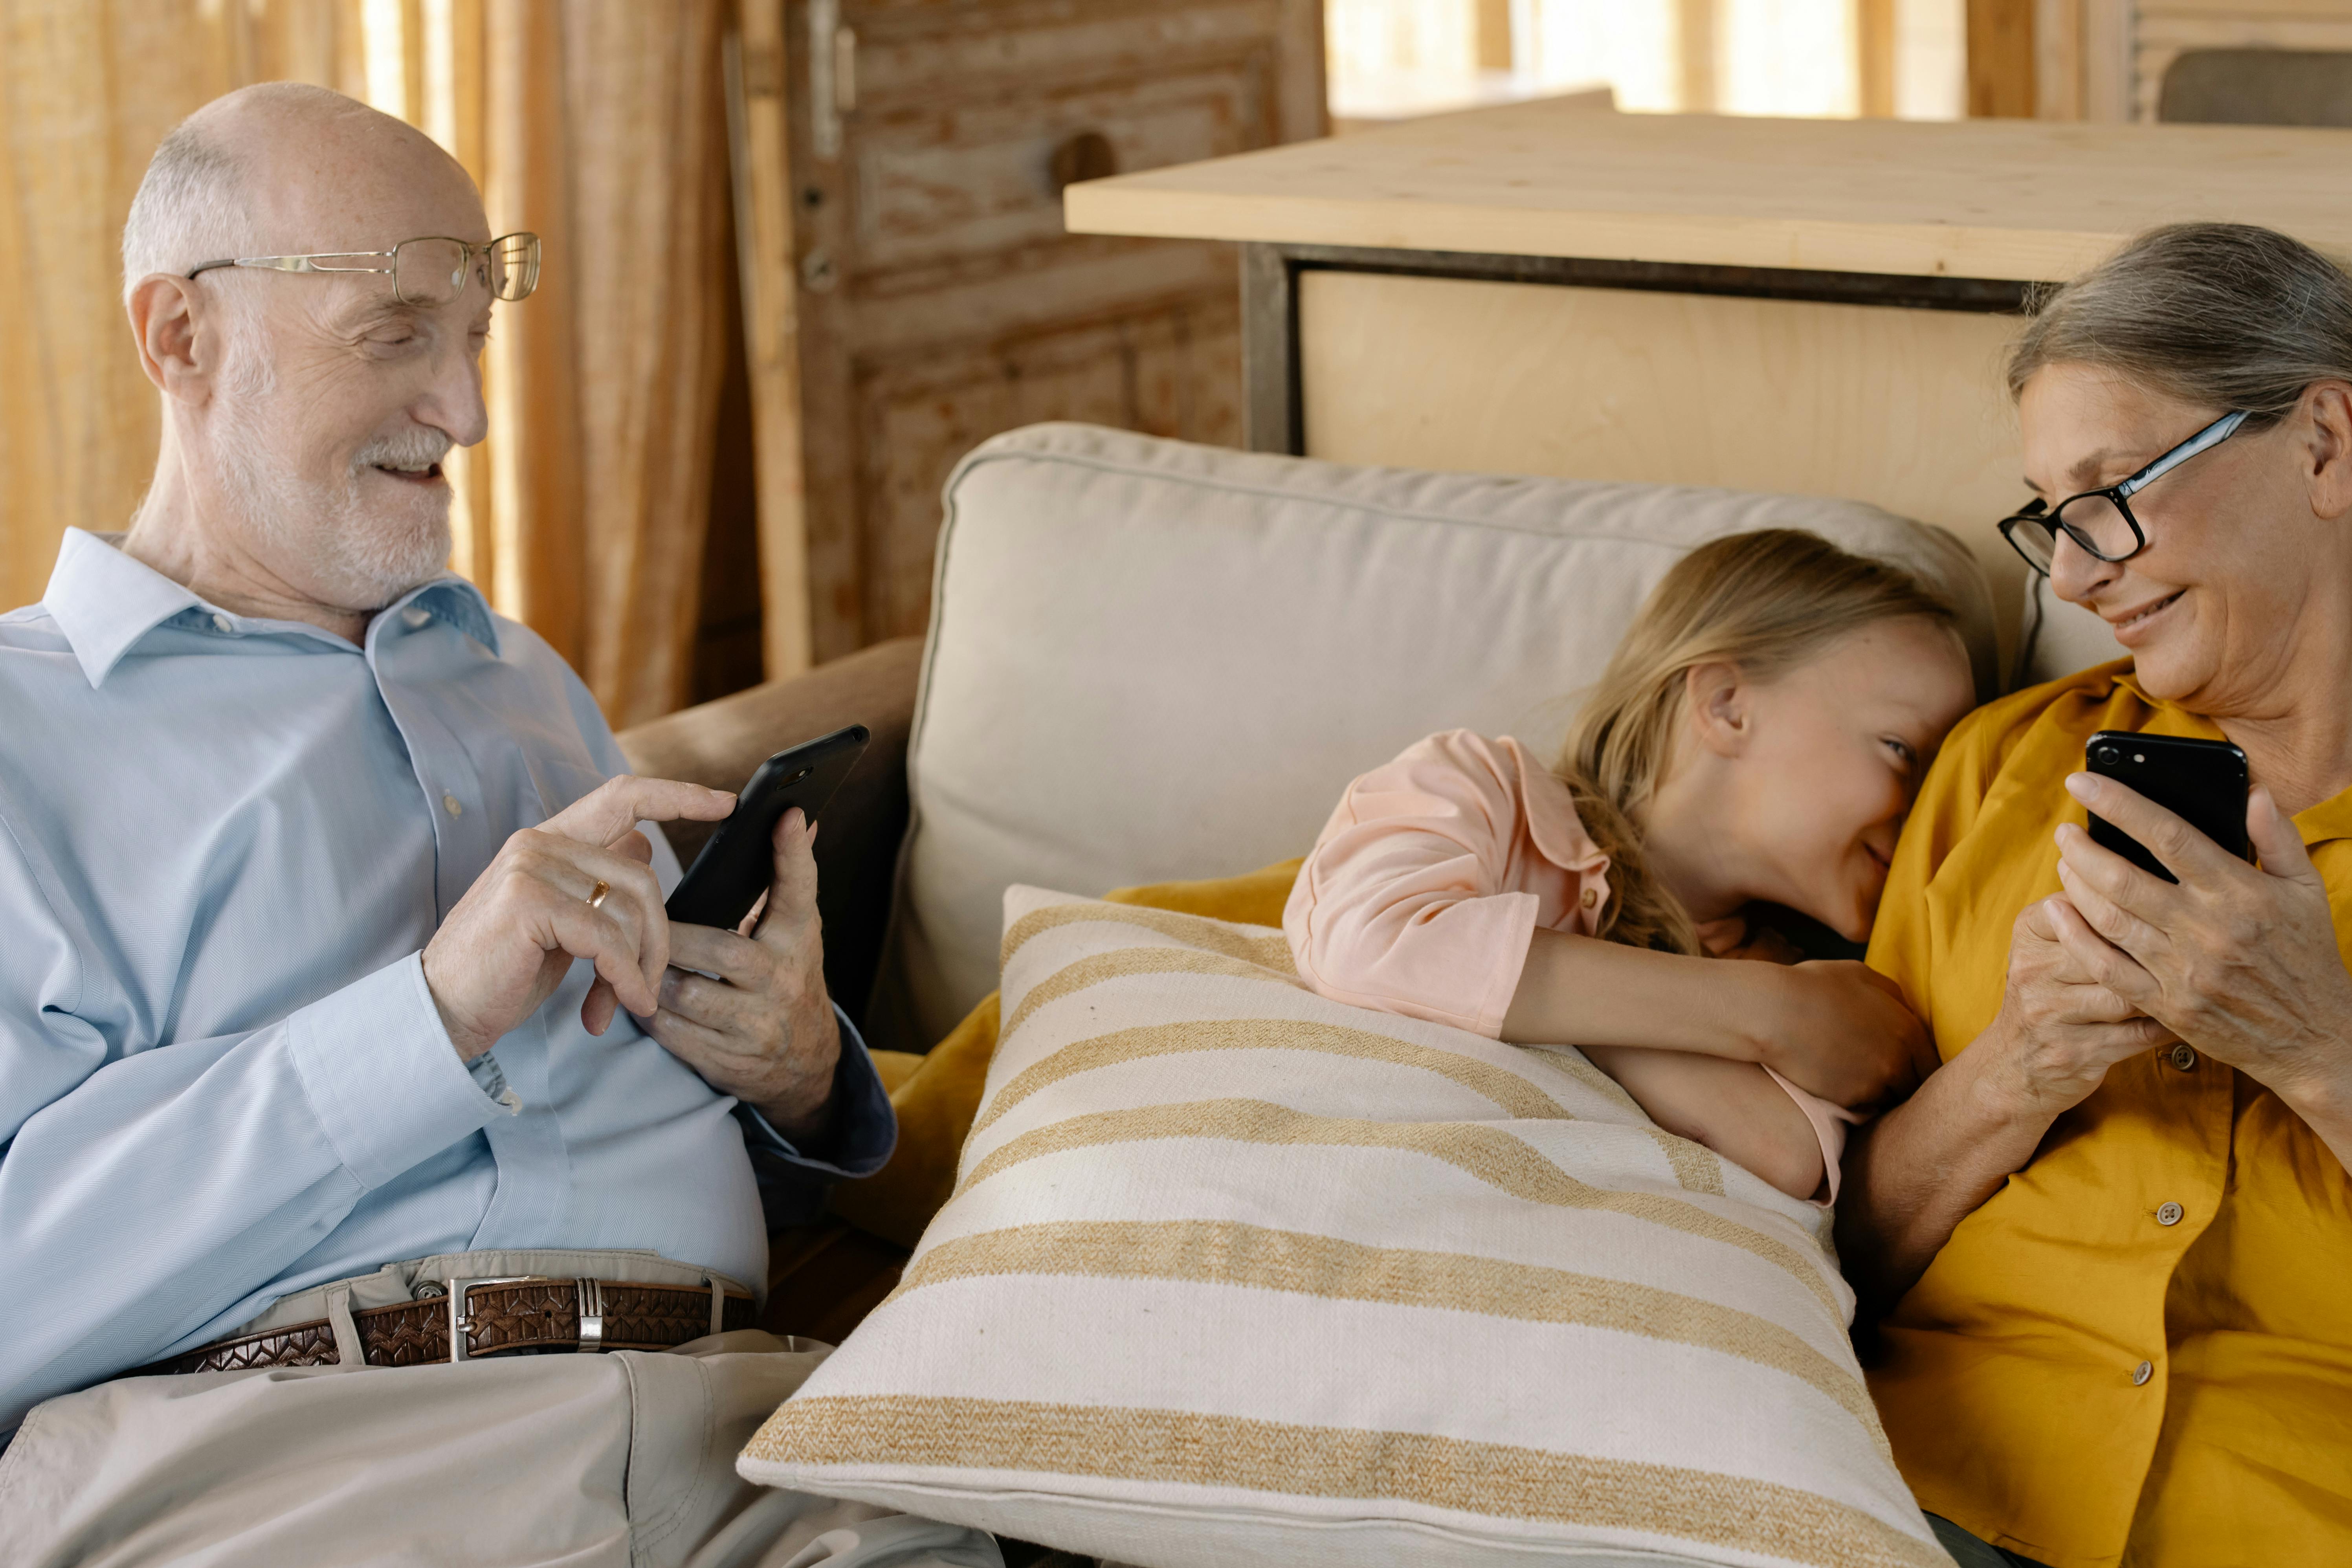 Grandparents bonding with their grandchild | Source: Pexels